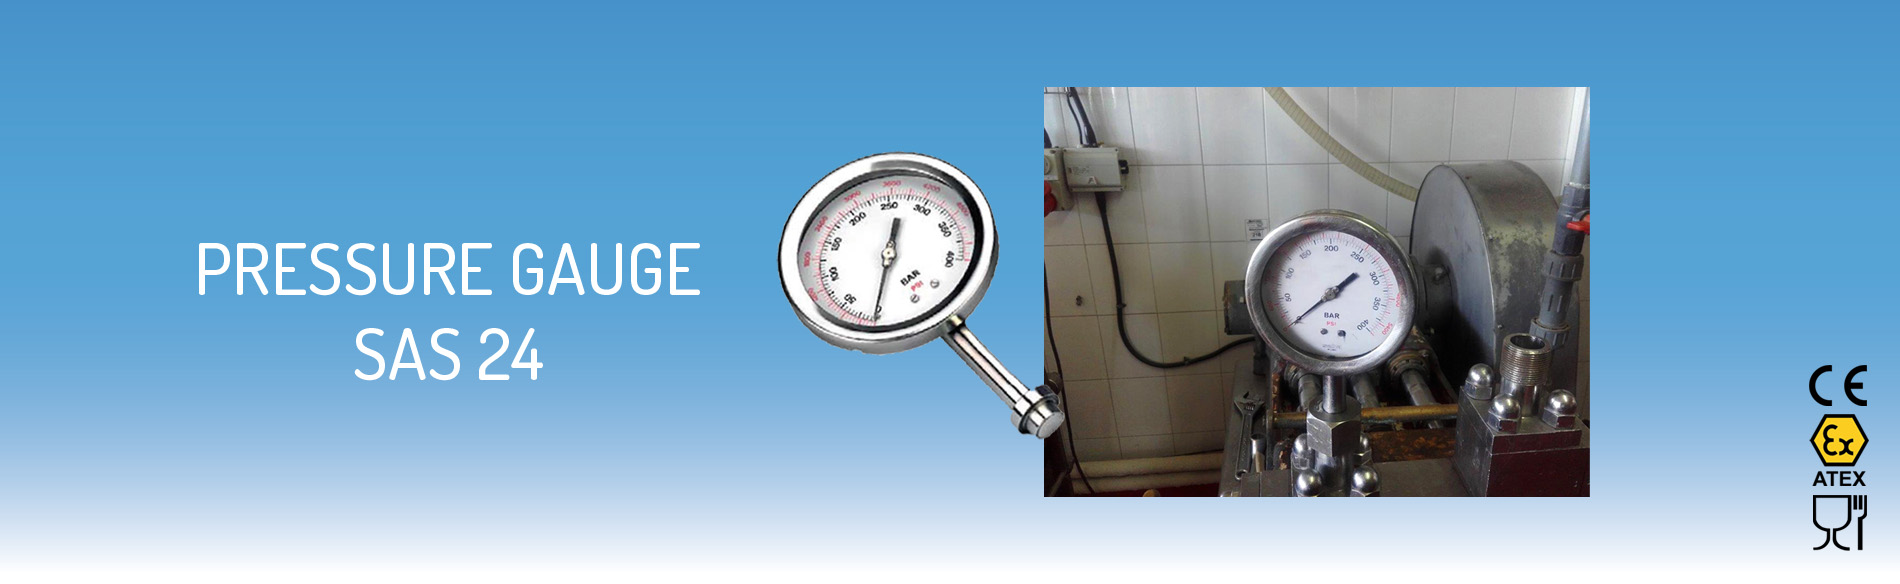 Pressure gauge SAS24 for homogenizer